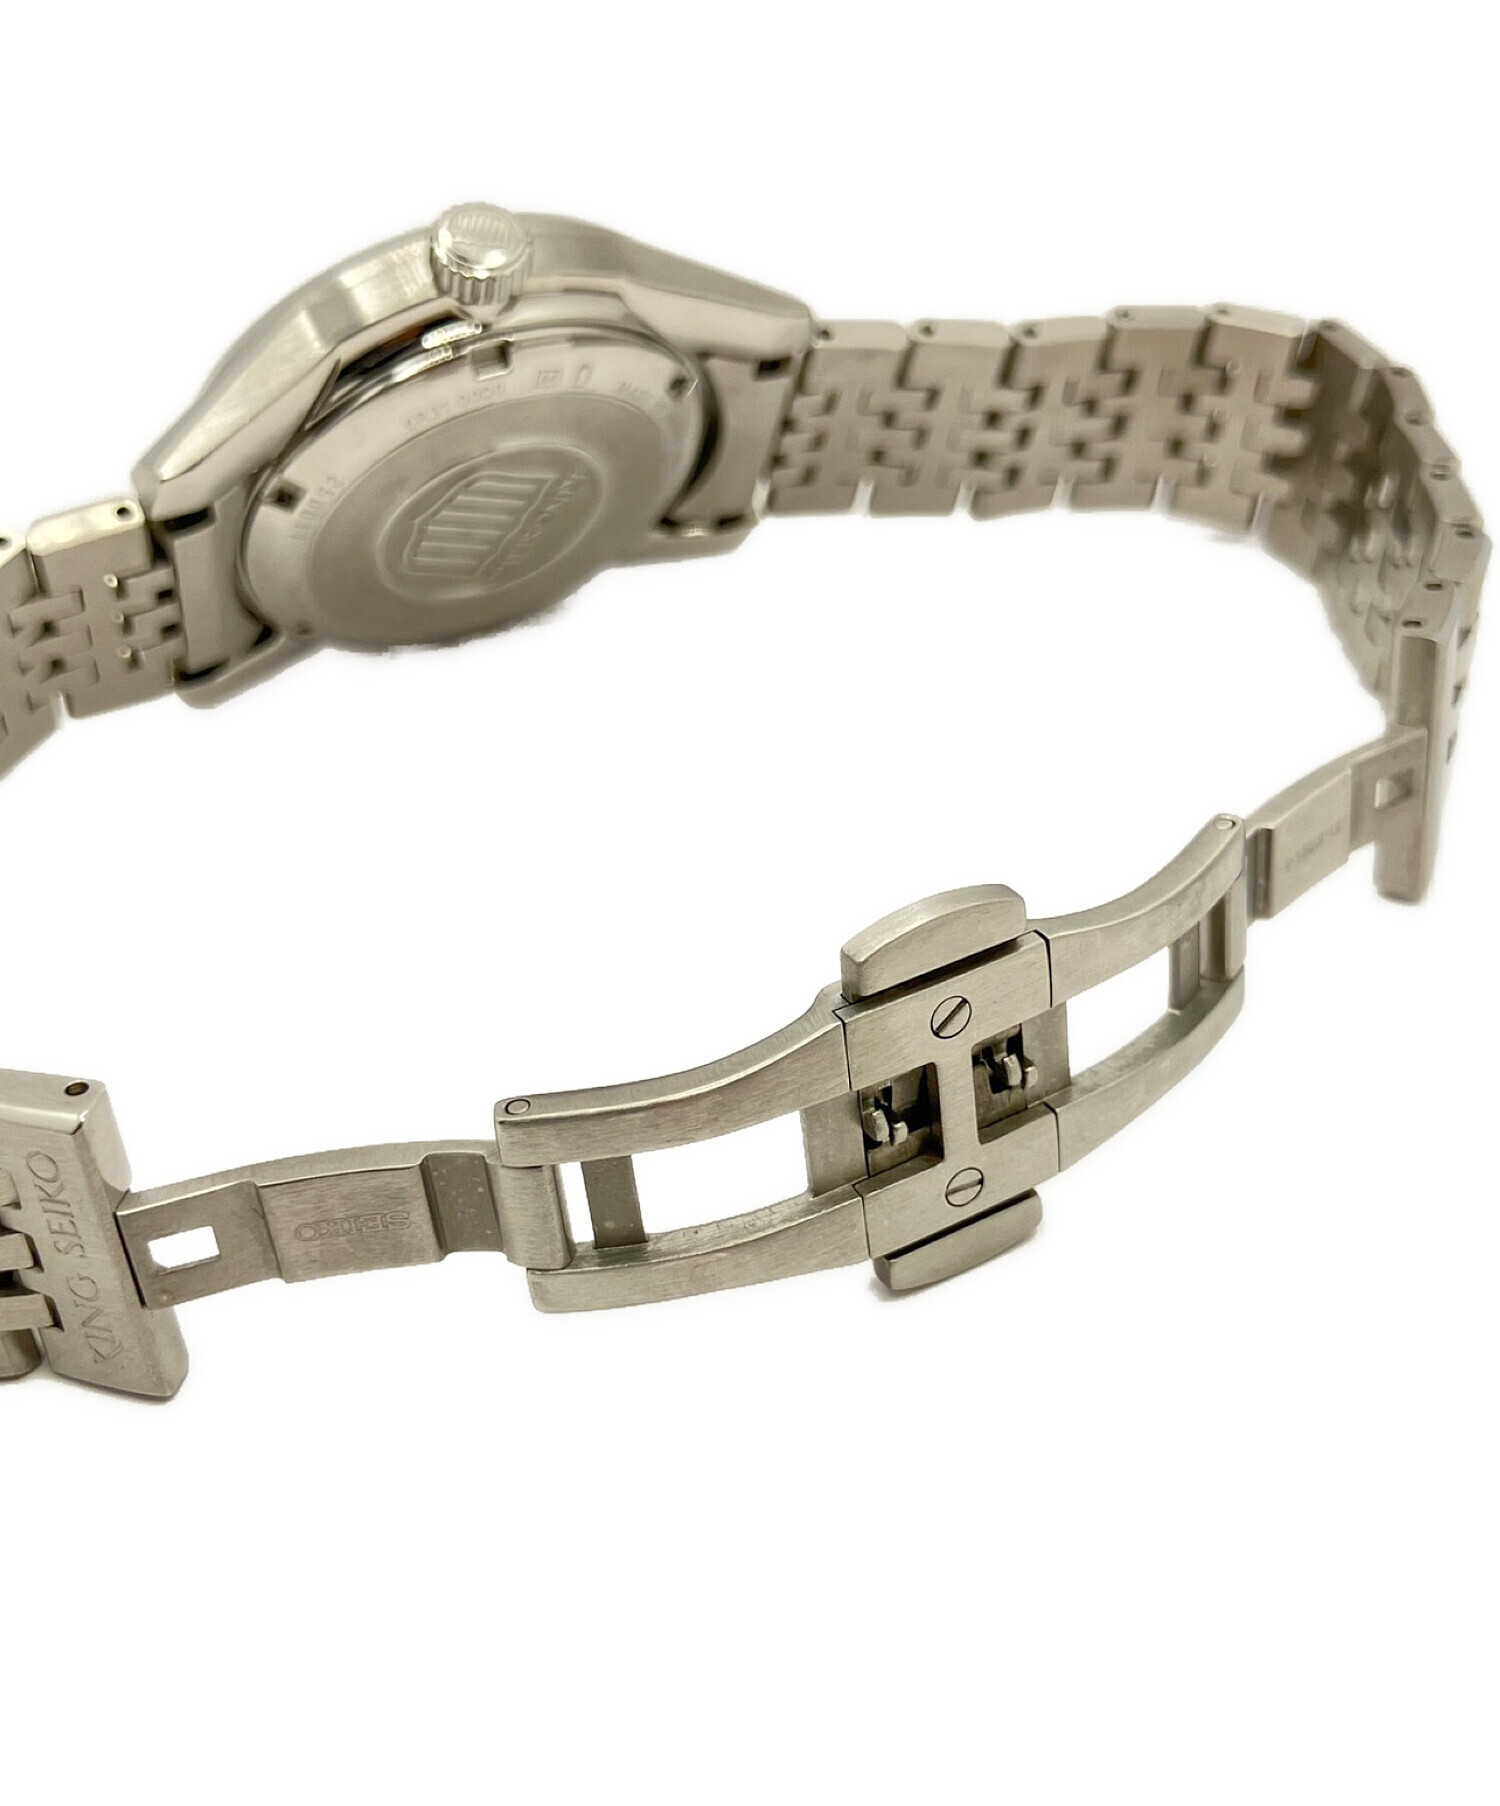 SEIKO (セイコー) 腕時計 シルバー文字盤 サイズ:37